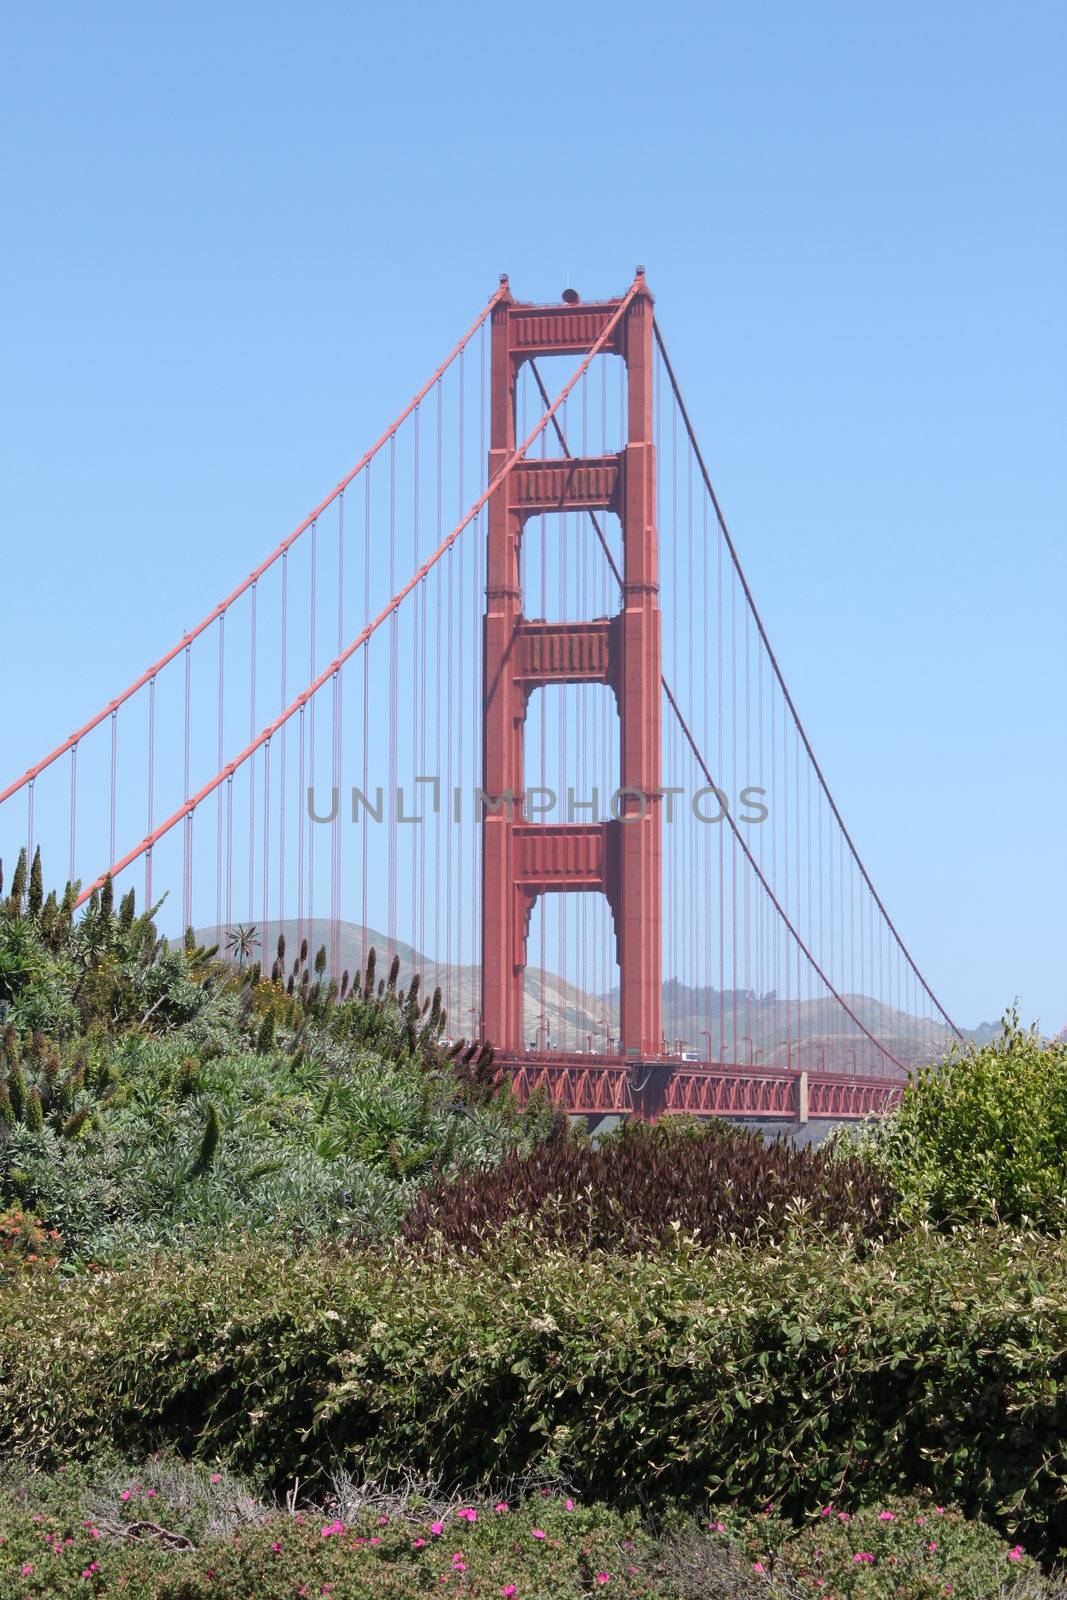 View of the Golden Gate bridge in San Francisco, California.